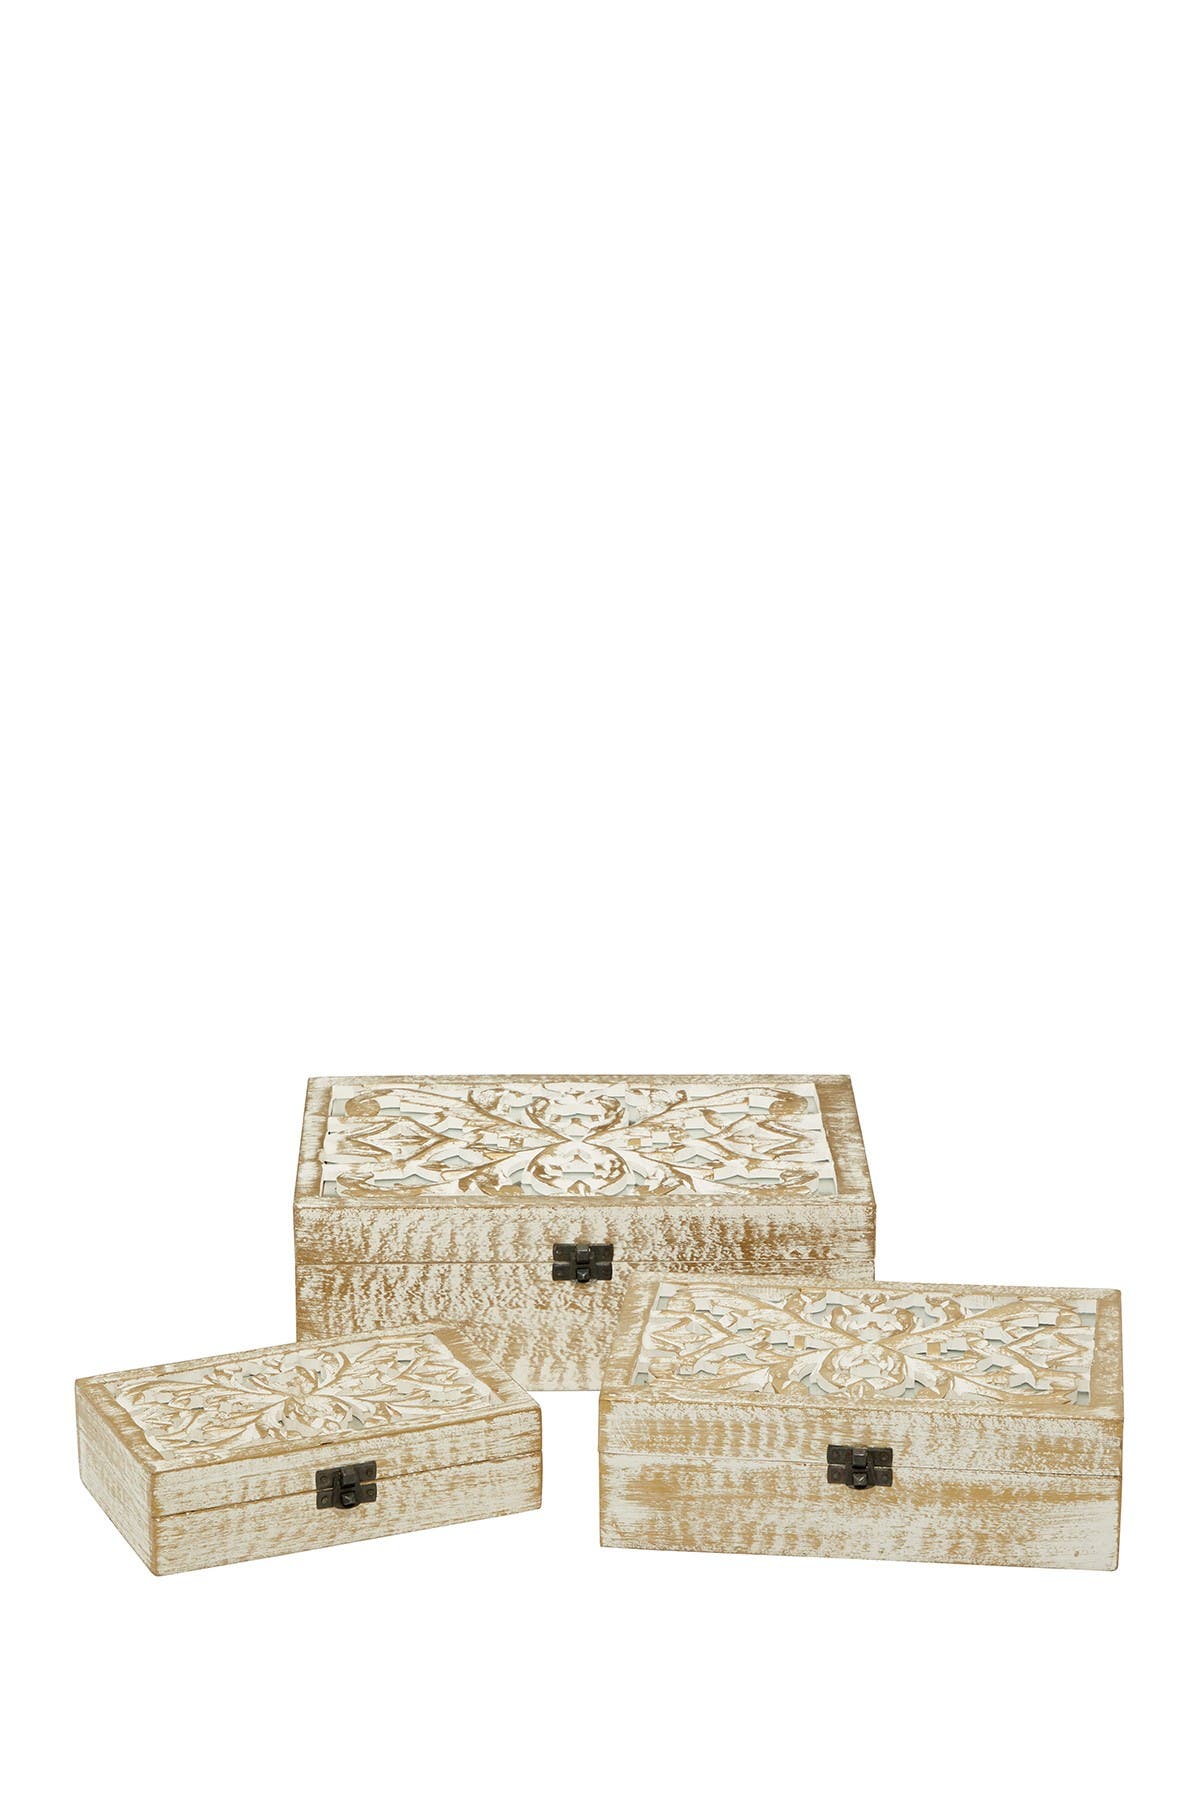 Willow Row Natural Rectangular Distressed White Wooden Filigree Decorative Box